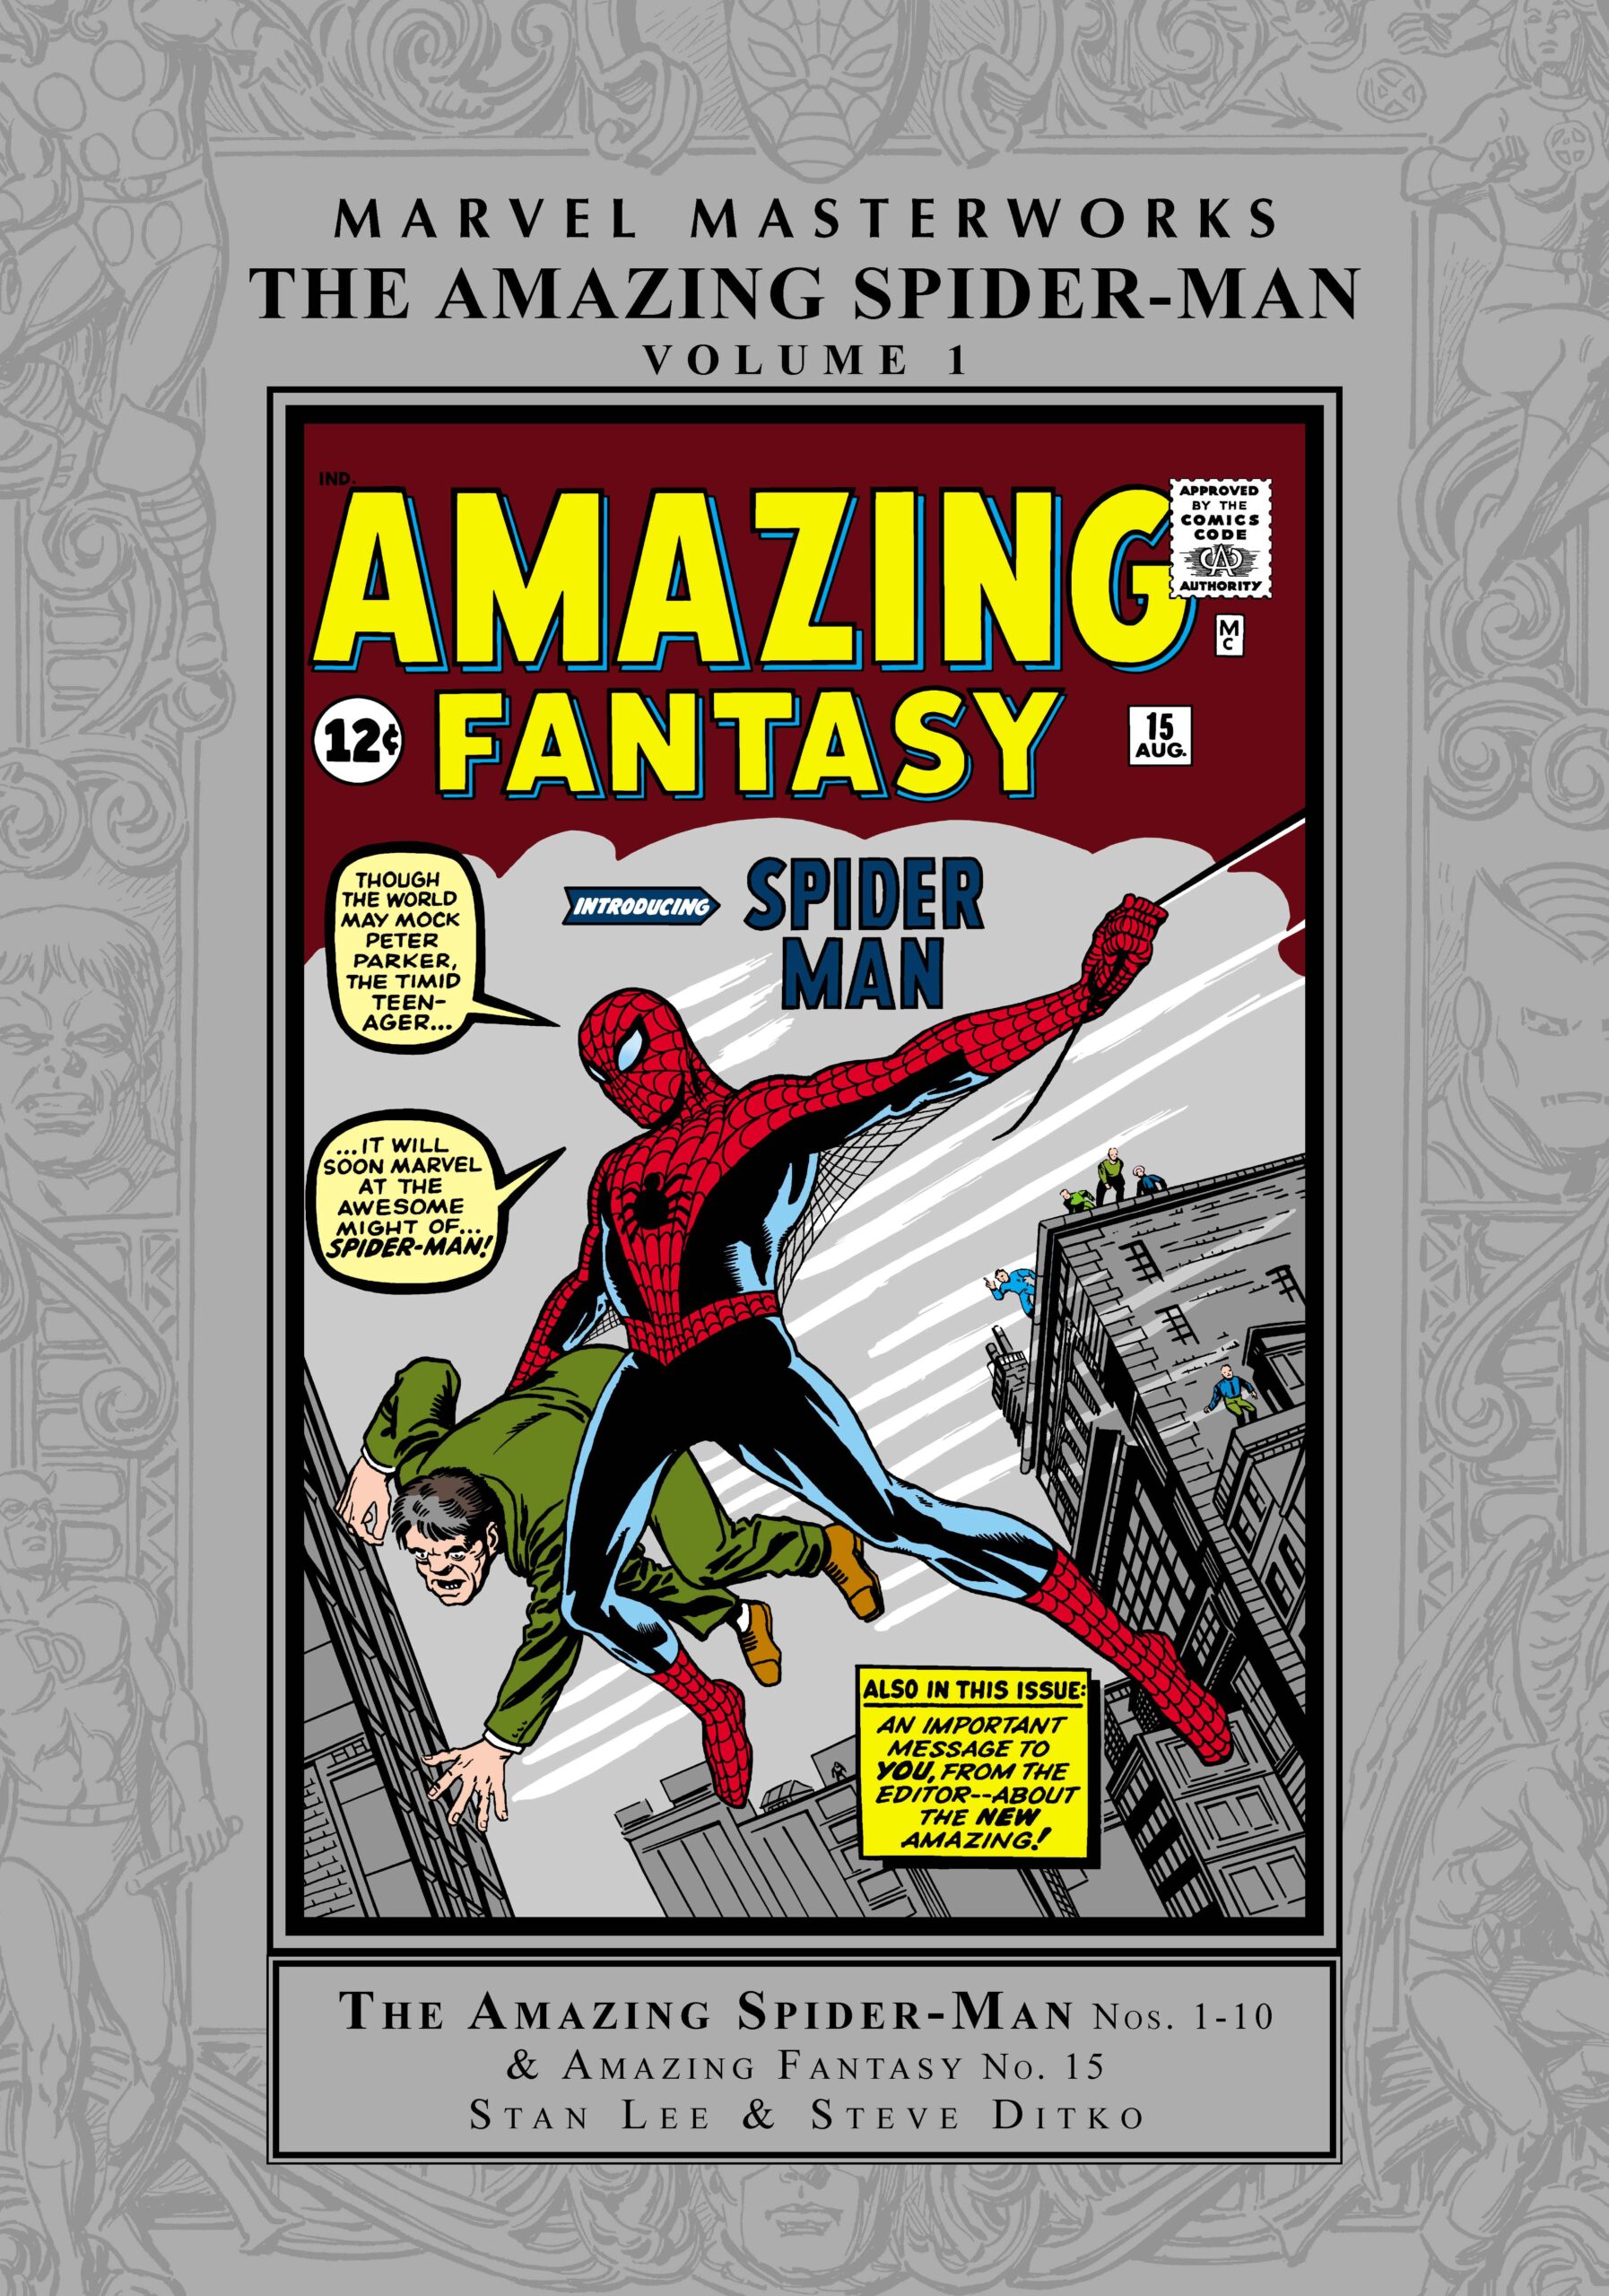 Marvel REMASTERWORKS Spider-man